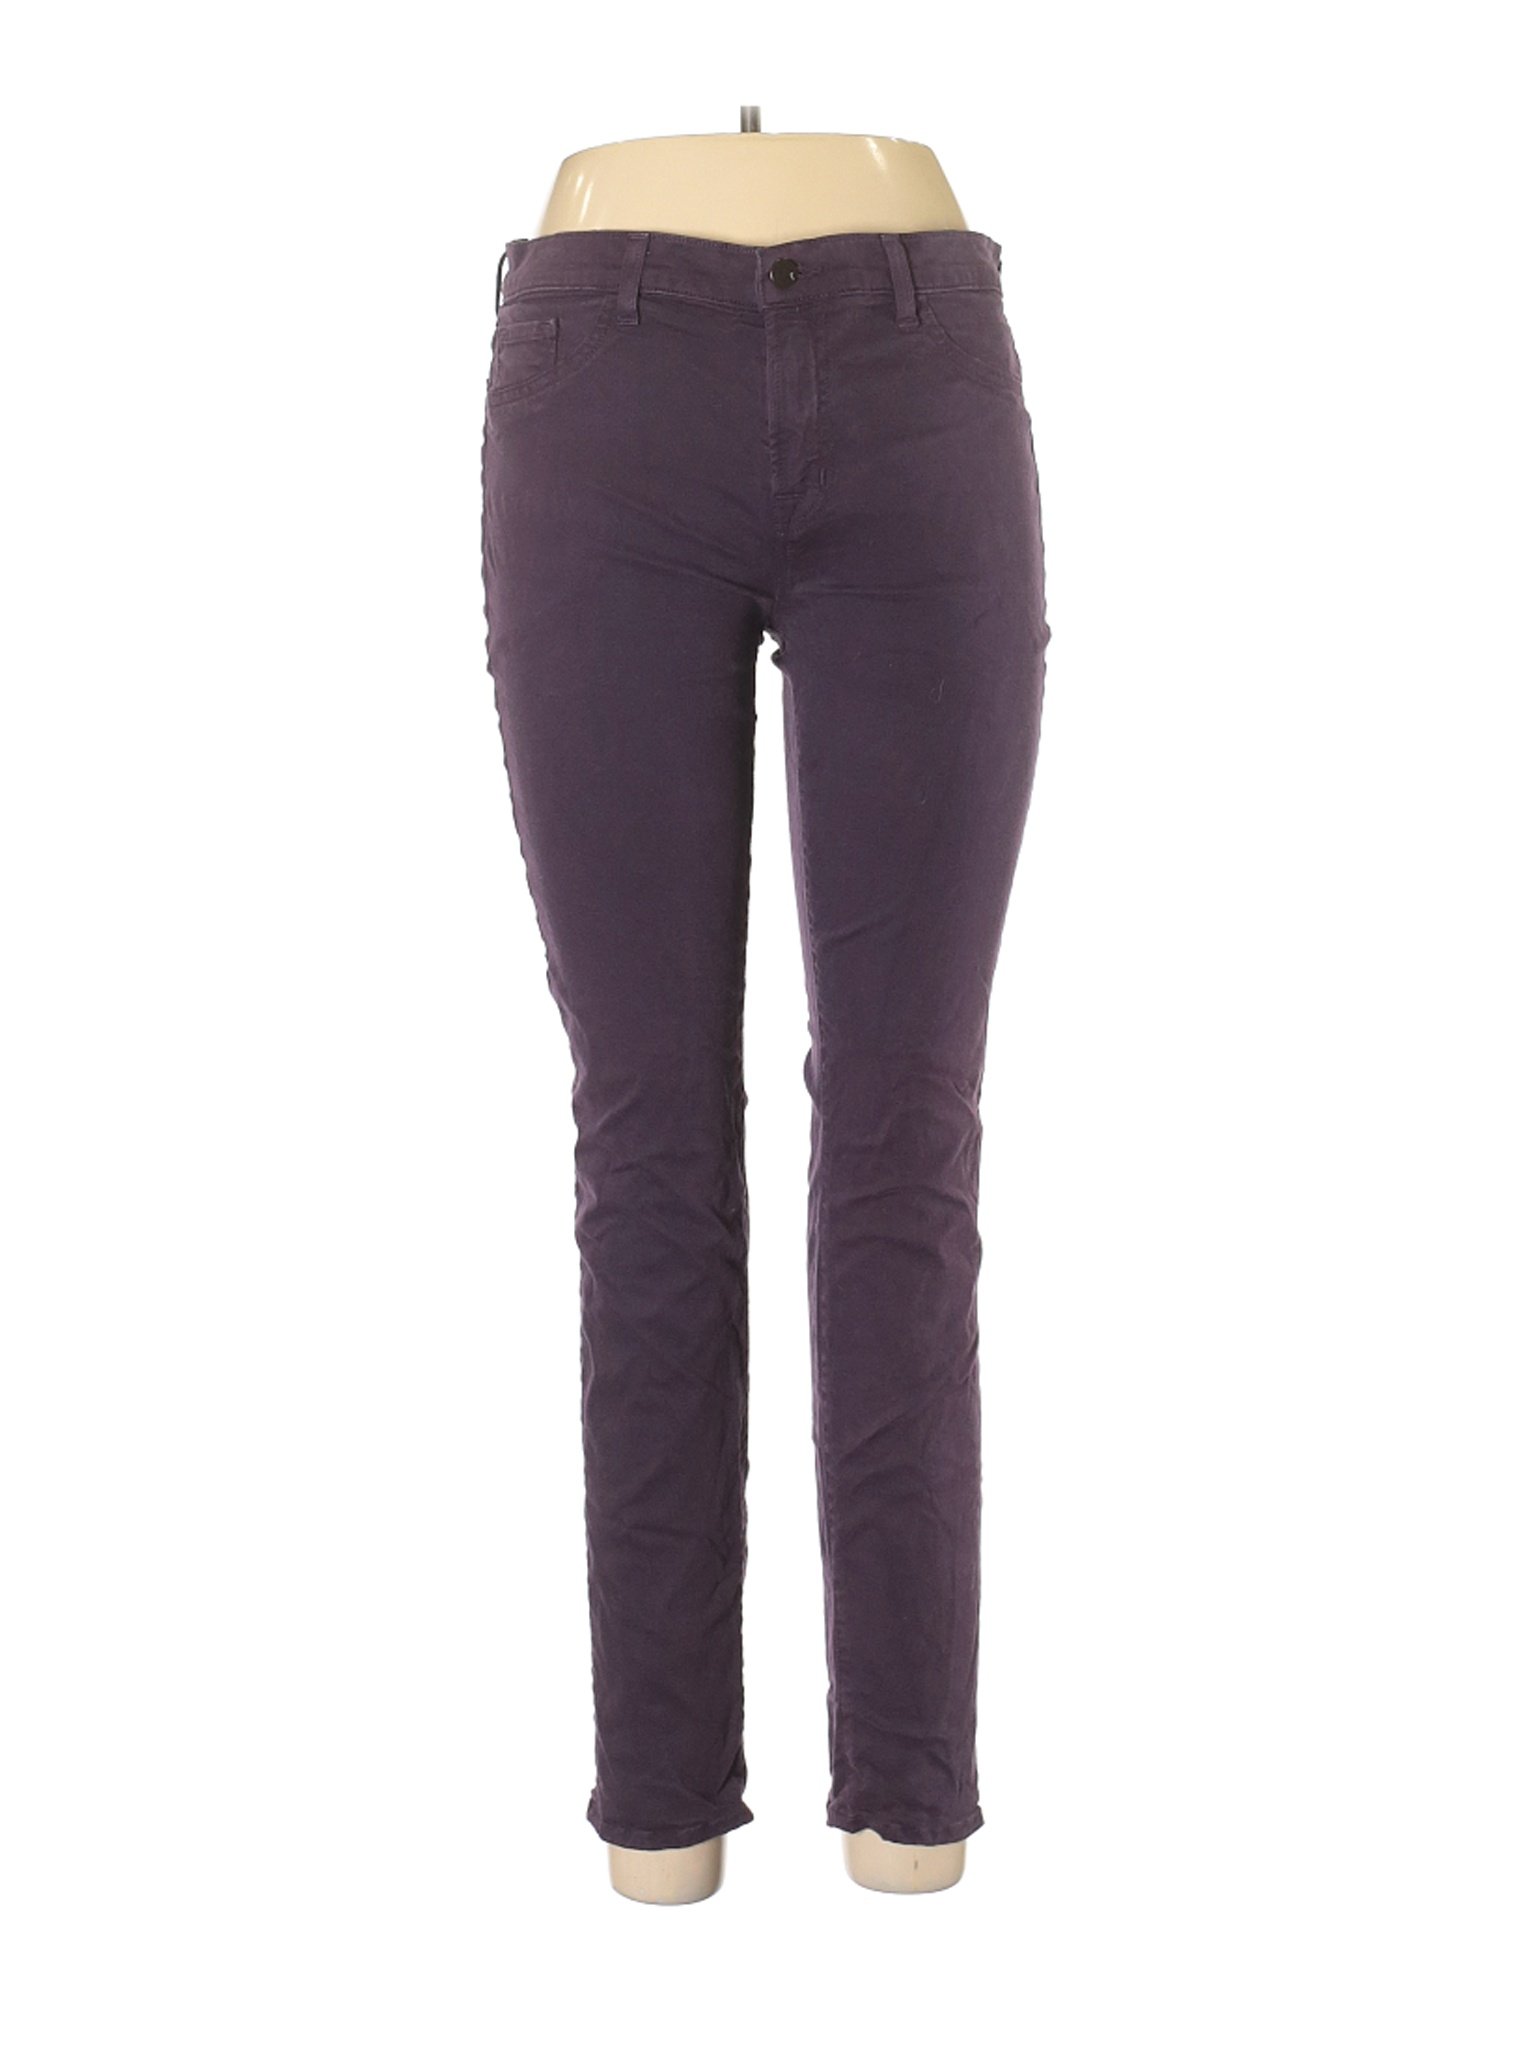 purple brand jeans customer service